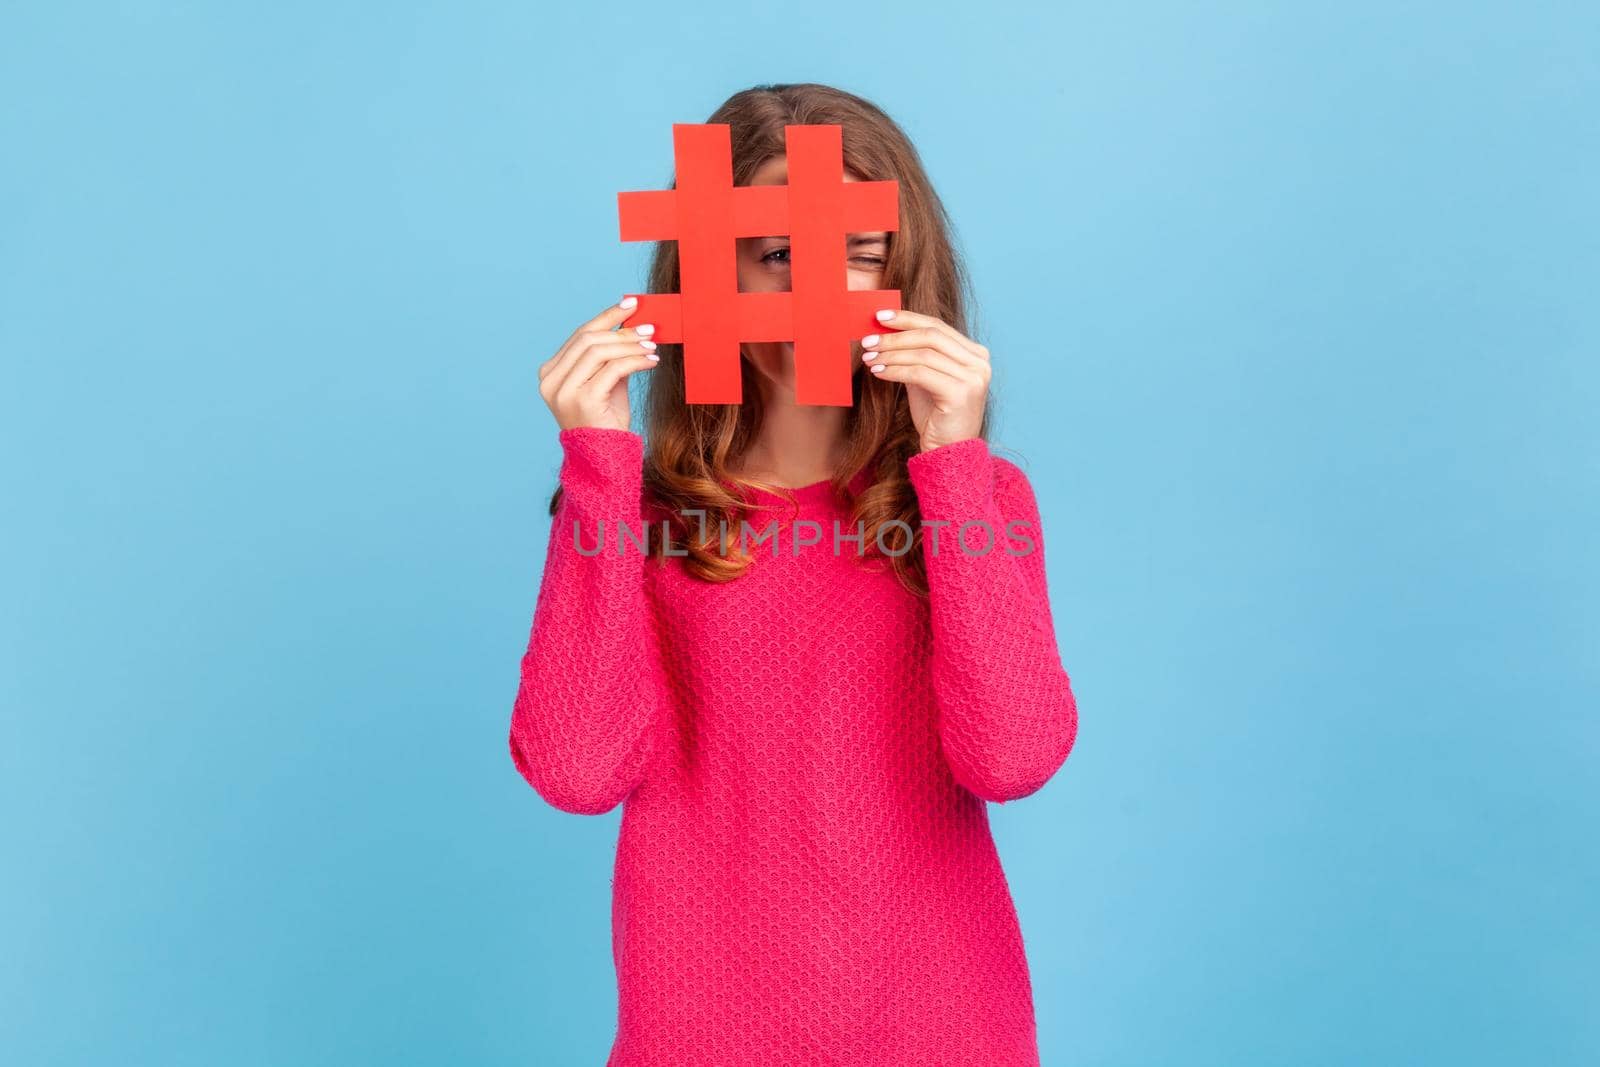 Woman looking through big red hashtag symbol, popular internet idea, viral content. by Khosro1